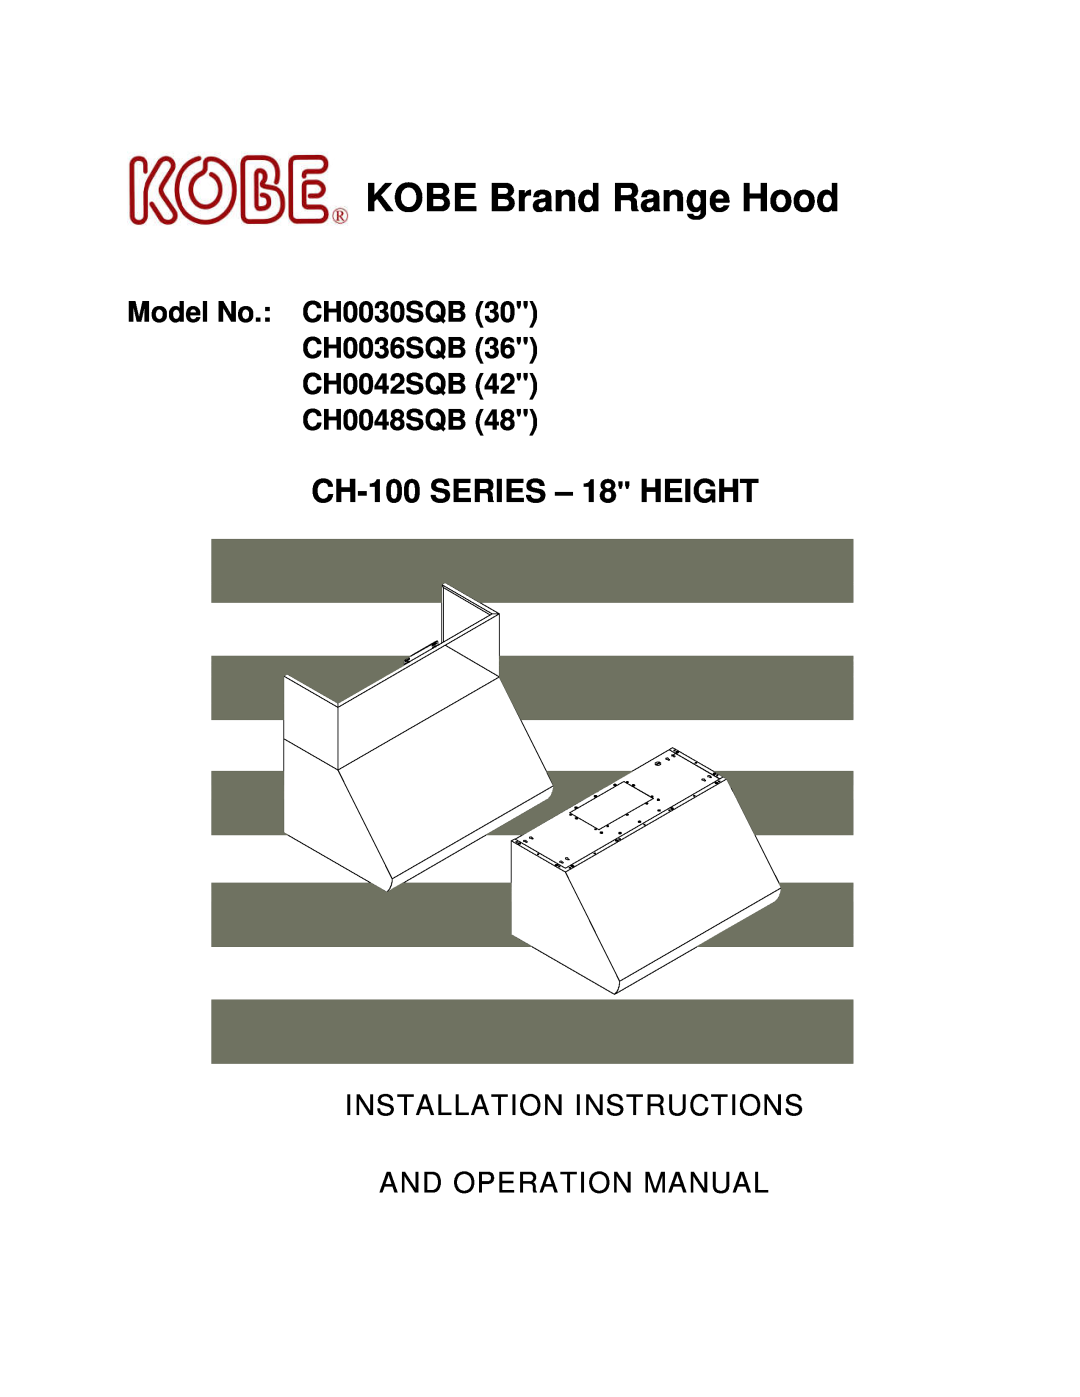 Kobe Range Hoods manual Model No. CH0030SQB CH0036SQB CH0042SQB CH0048SQB, KOBE Brand Range Hood 